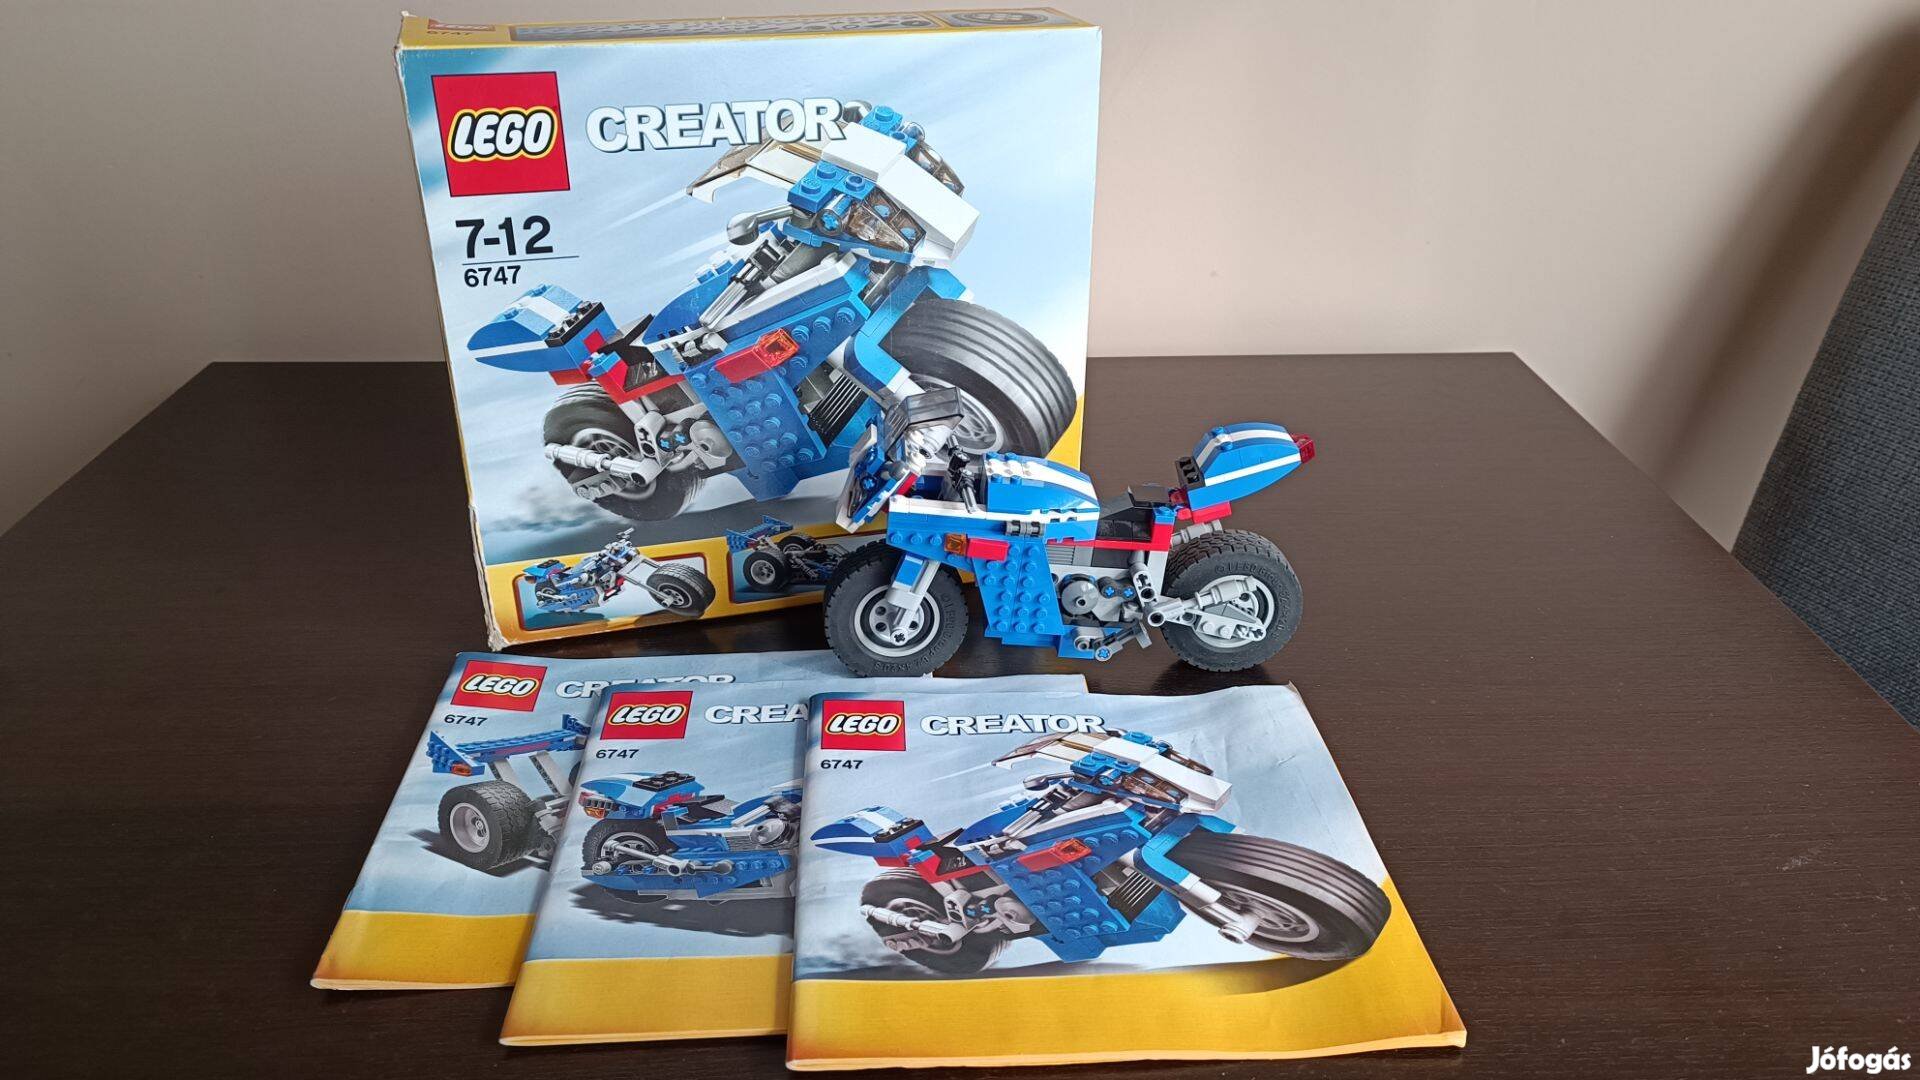 Lego Creator 6747 Race Rider